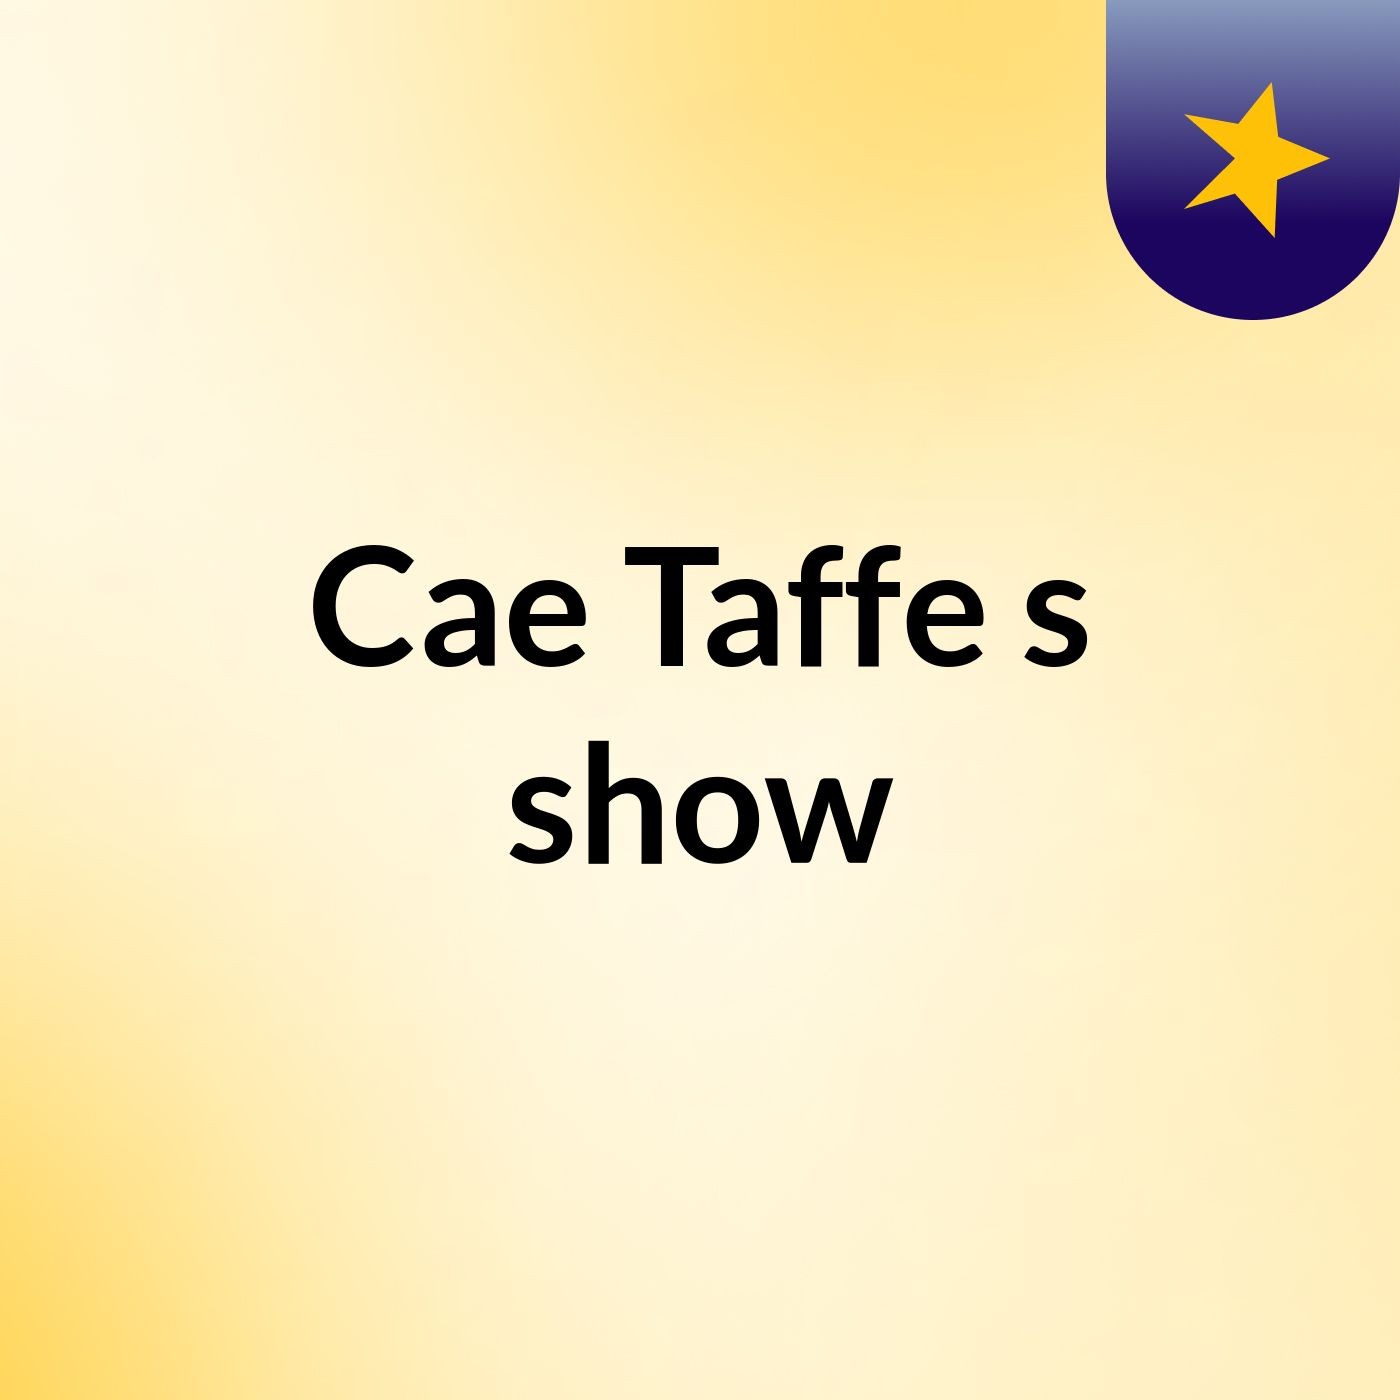 Cae Taffe's show